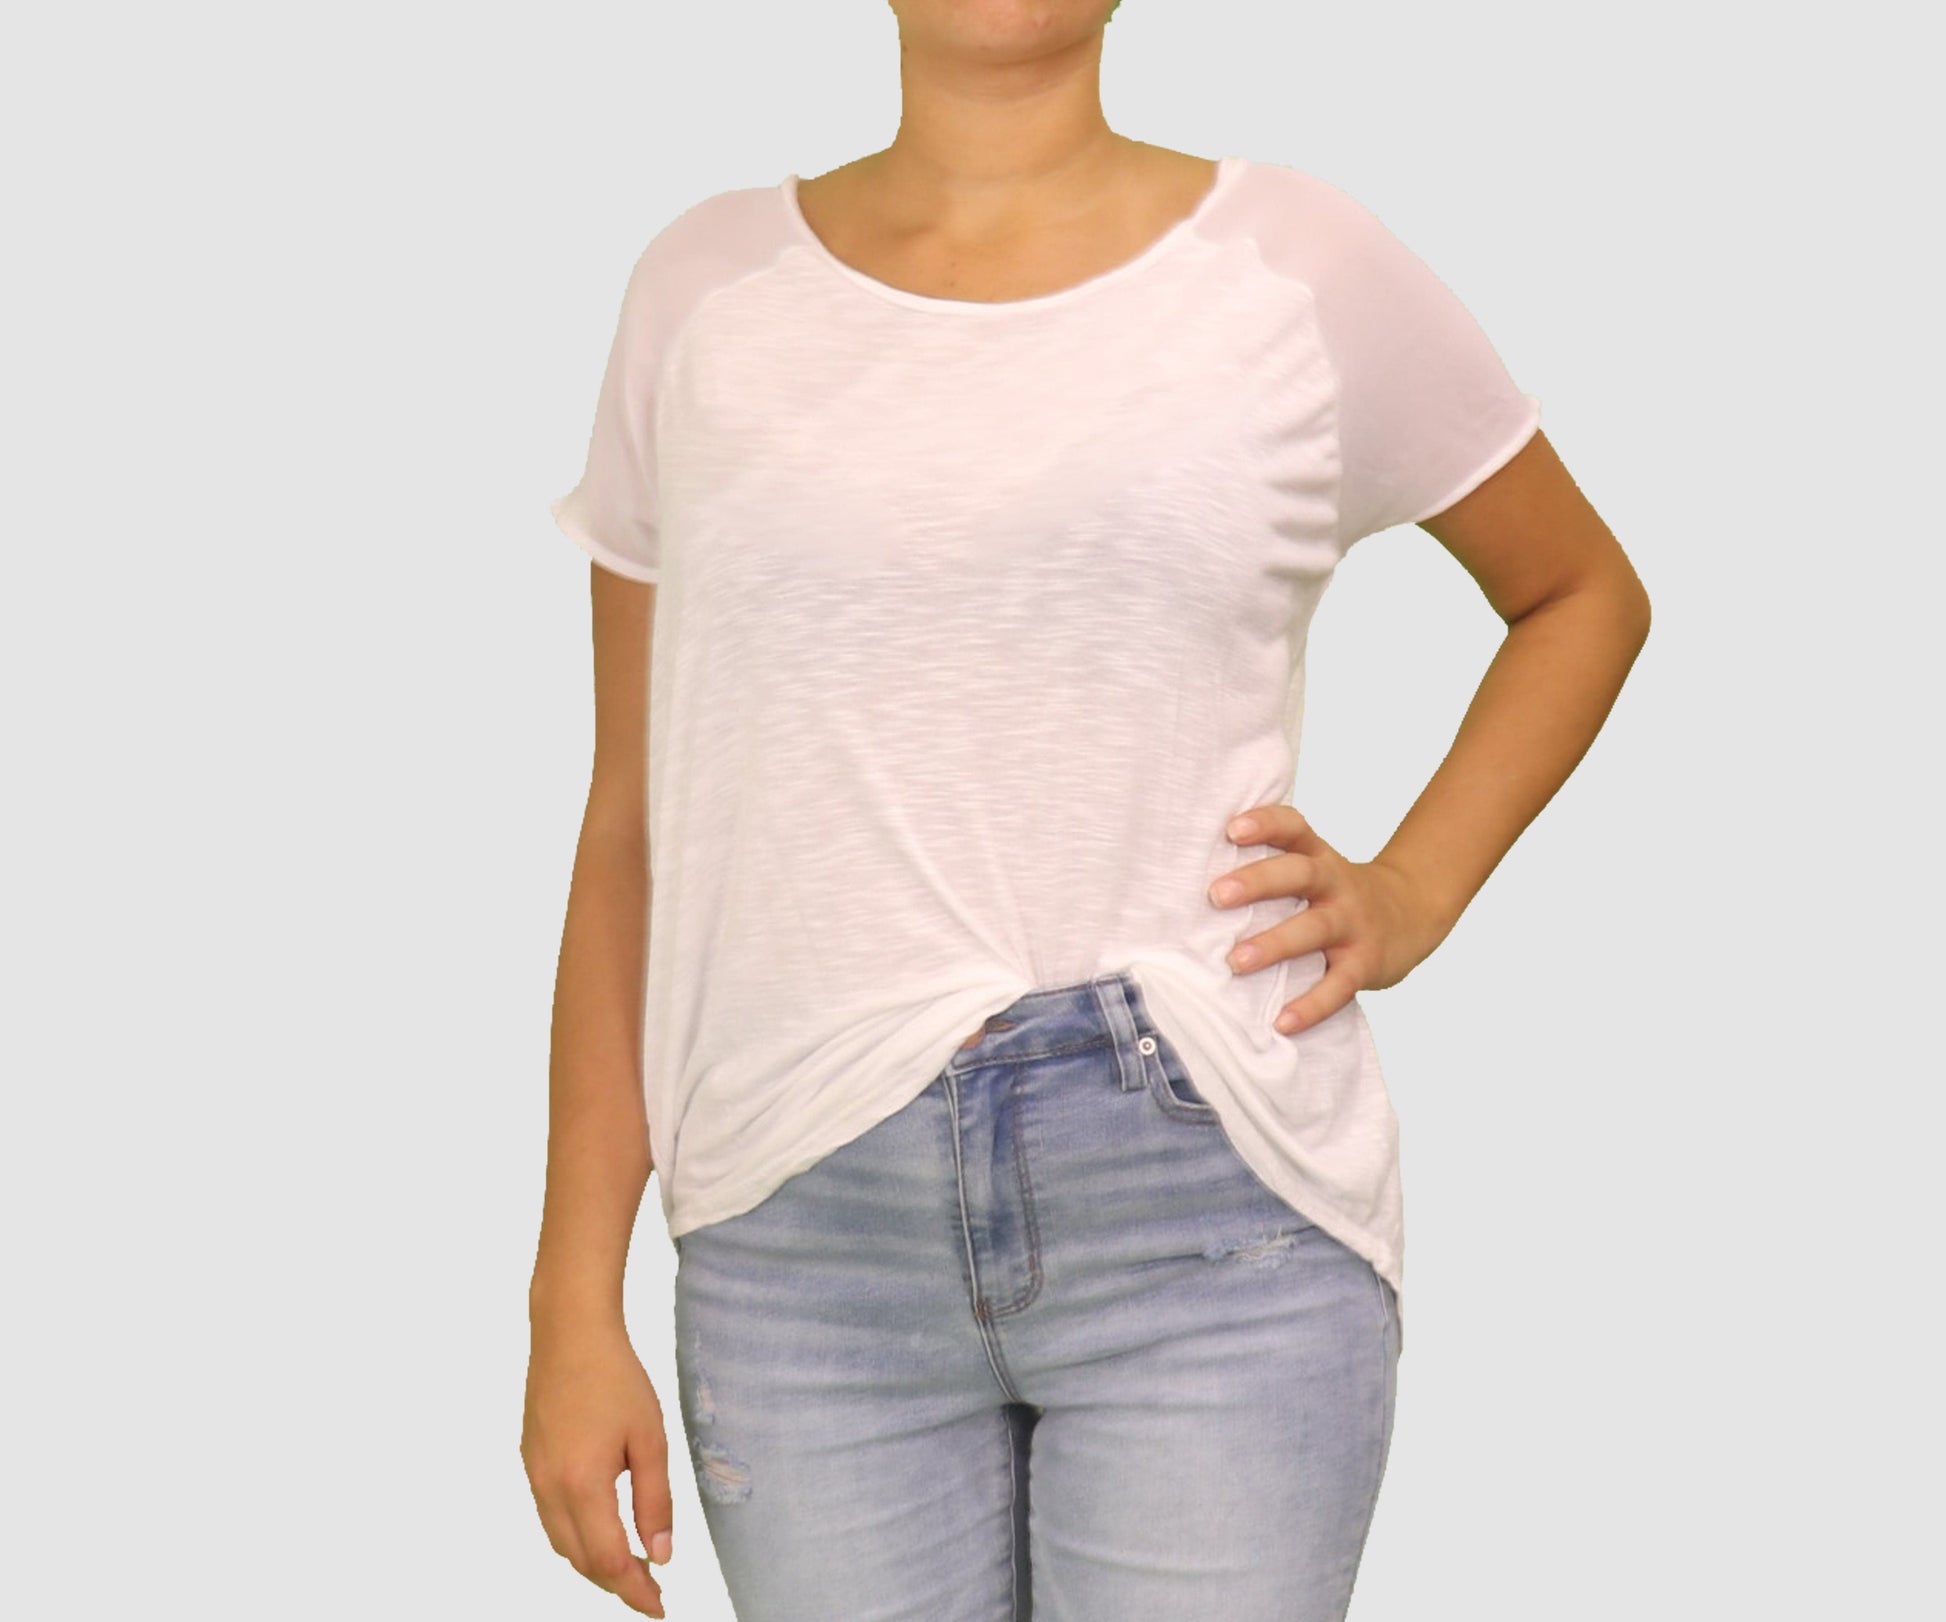 jeans by Buffalo Womens Tops Medium / White Short Sleeve Top